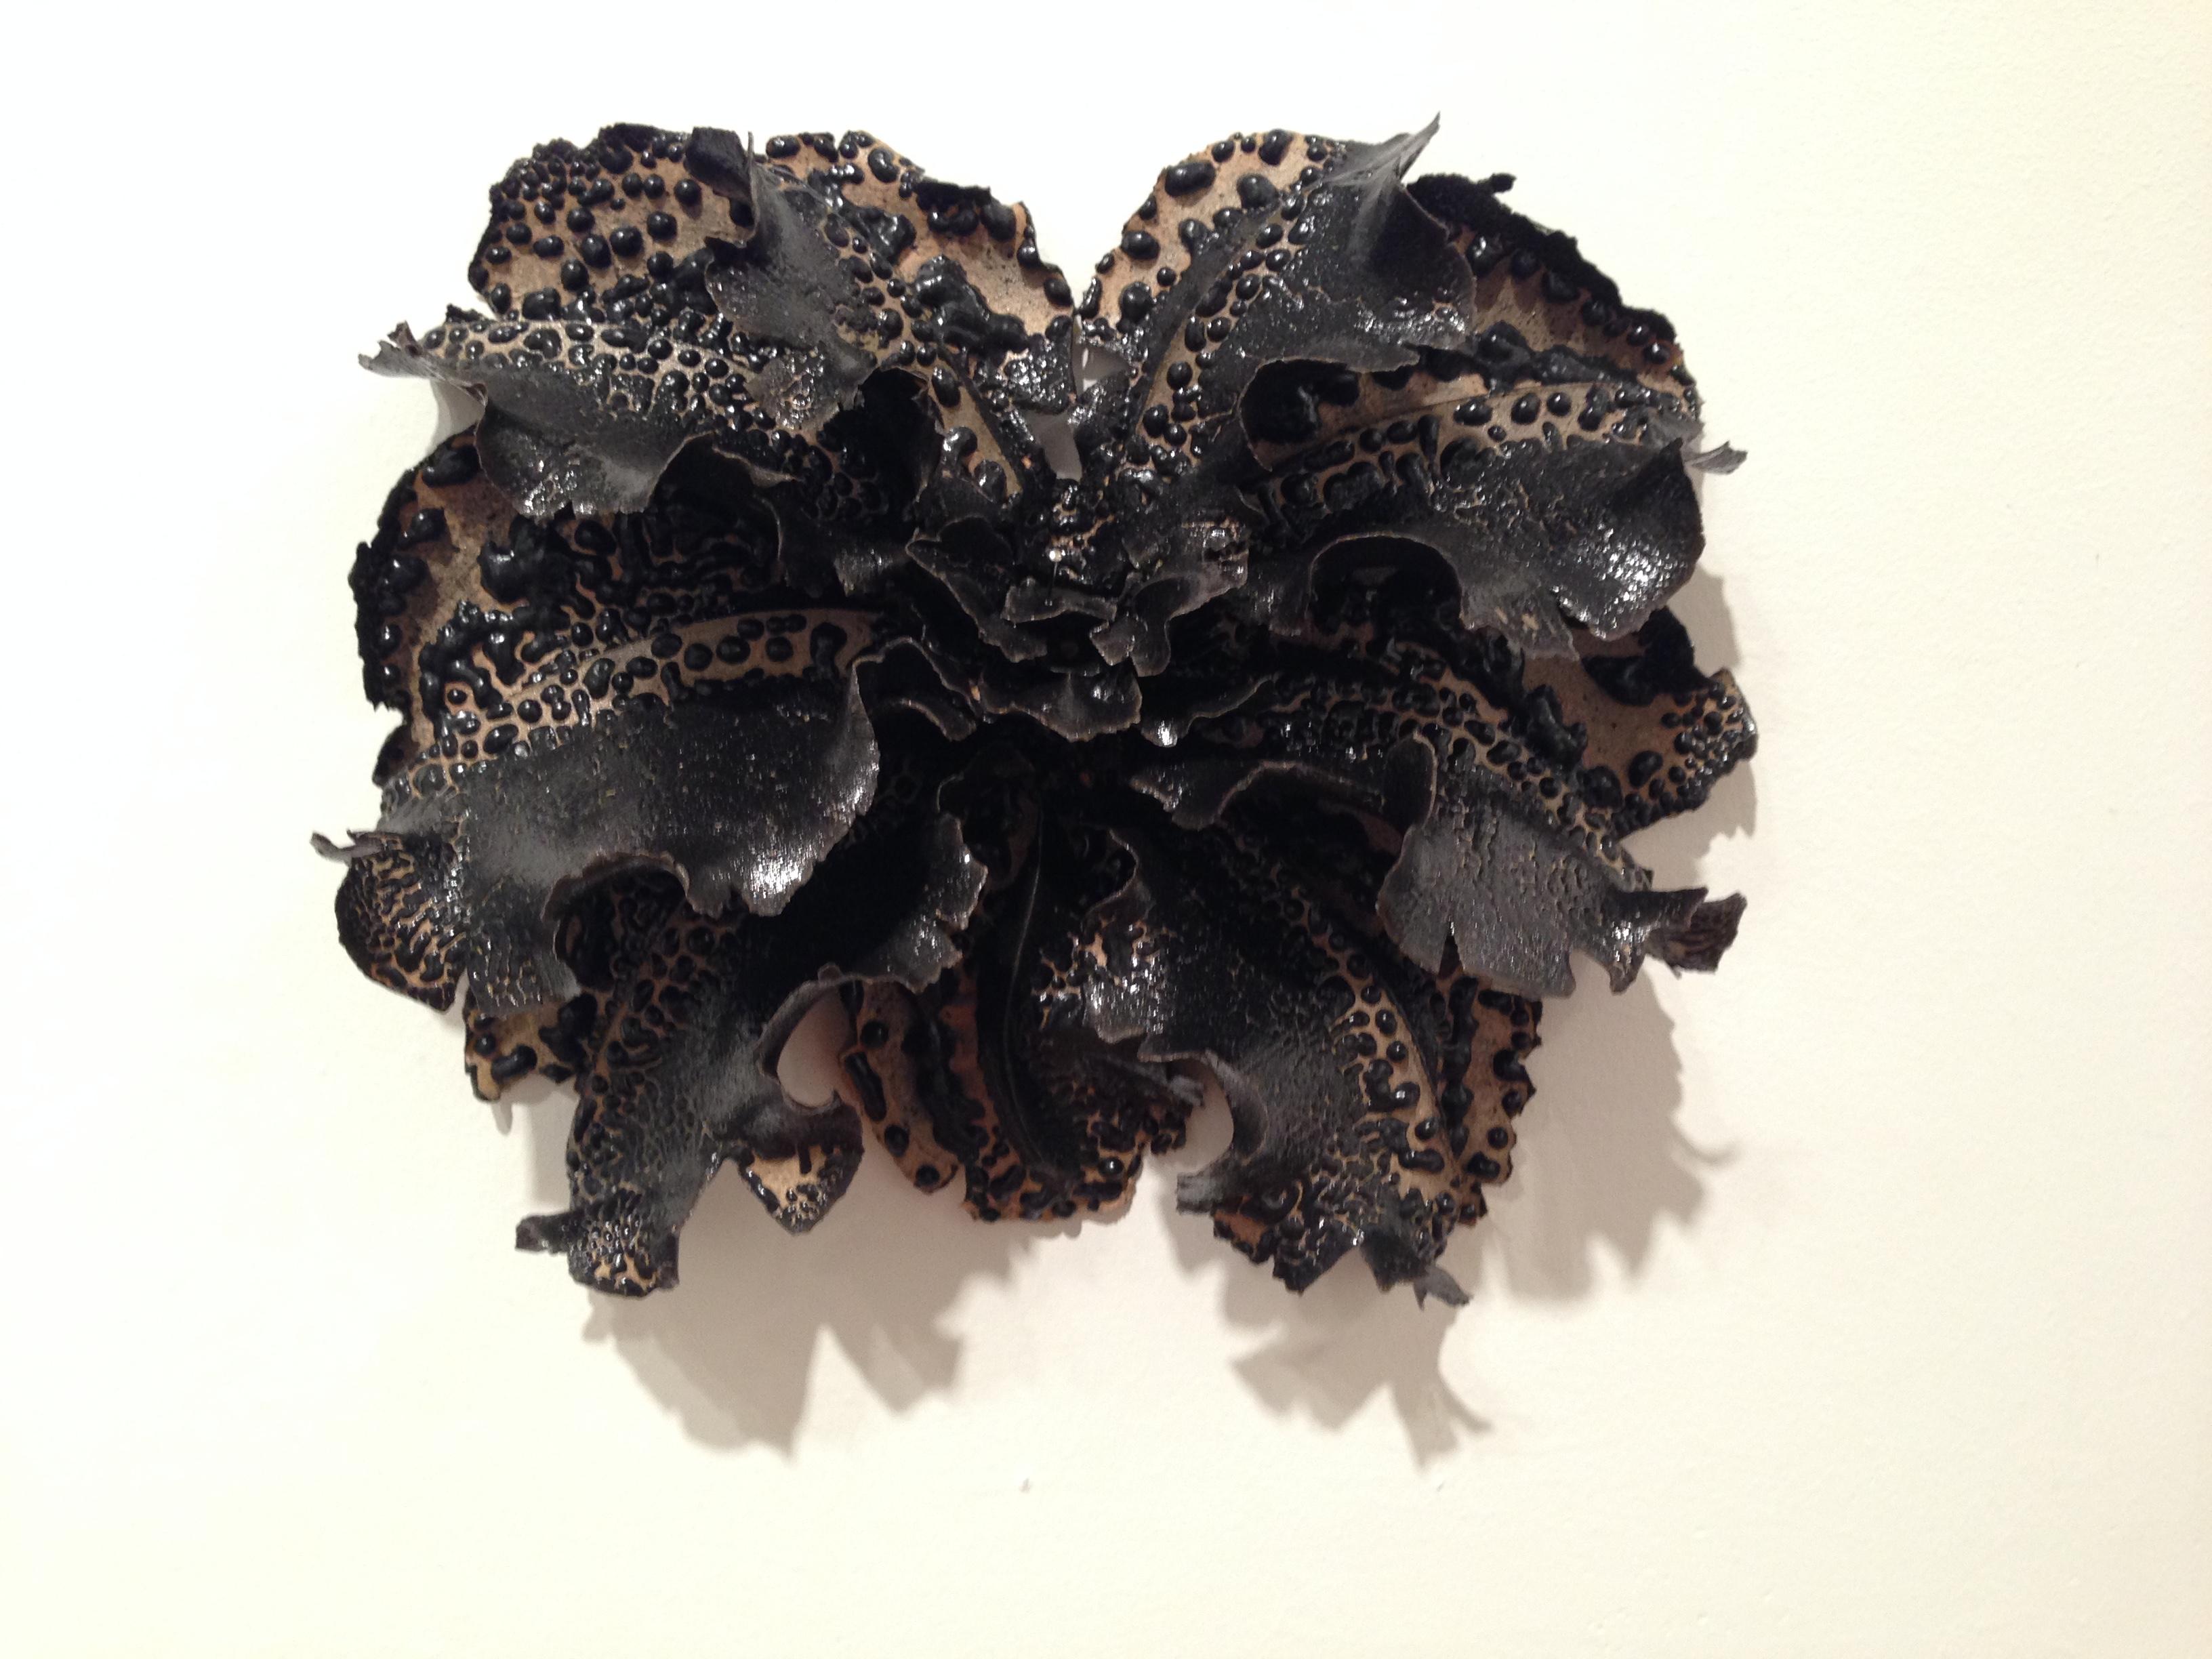 Christopher Adams Still-Life Sculpture - Primordial Garden L4, black and tan biomorphic flora-like ceramic sculpture